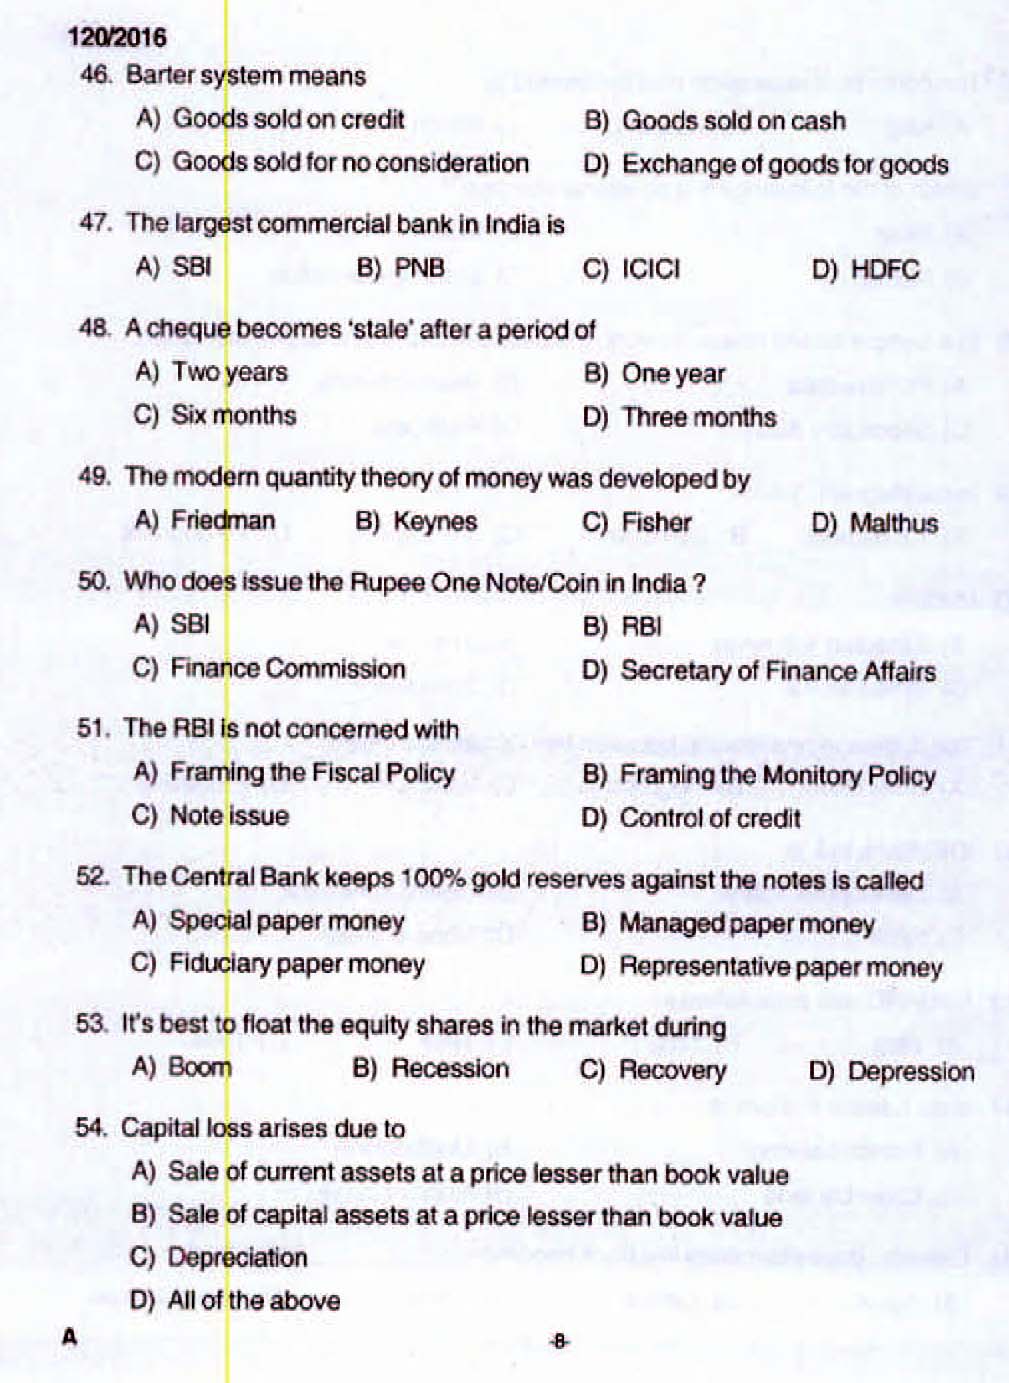 Kerala PSC Accountant Grade III OMR Exam 2016 Question Paper Code 1202016 6